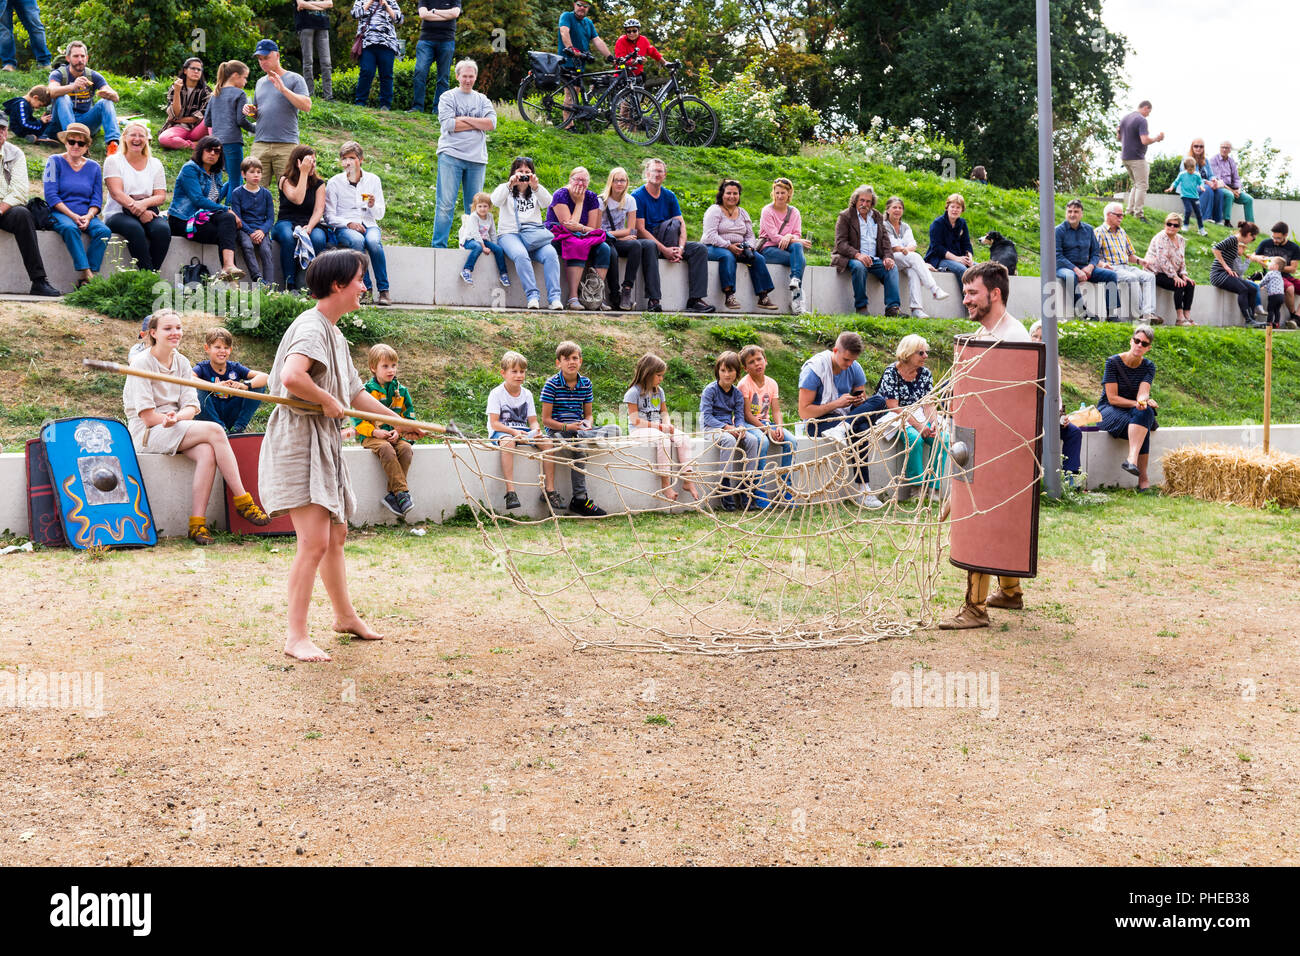 Gladiators training - Roman re enactment at Zülpich - 26th of August 2018 - Zülpich, North Rhine Westphalia, NRW, Germany, Europe Stock Photo